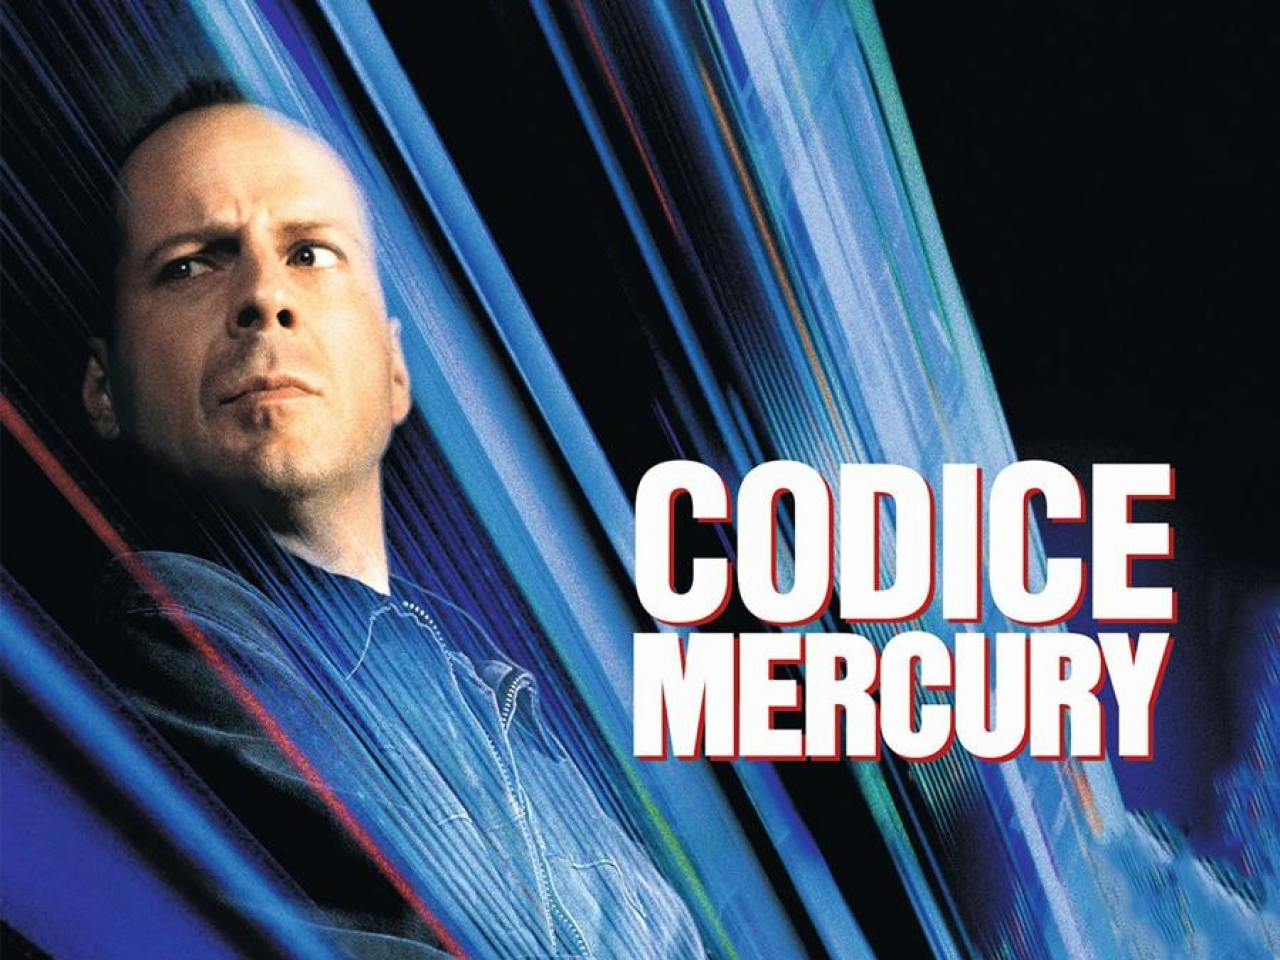 Codice mercury